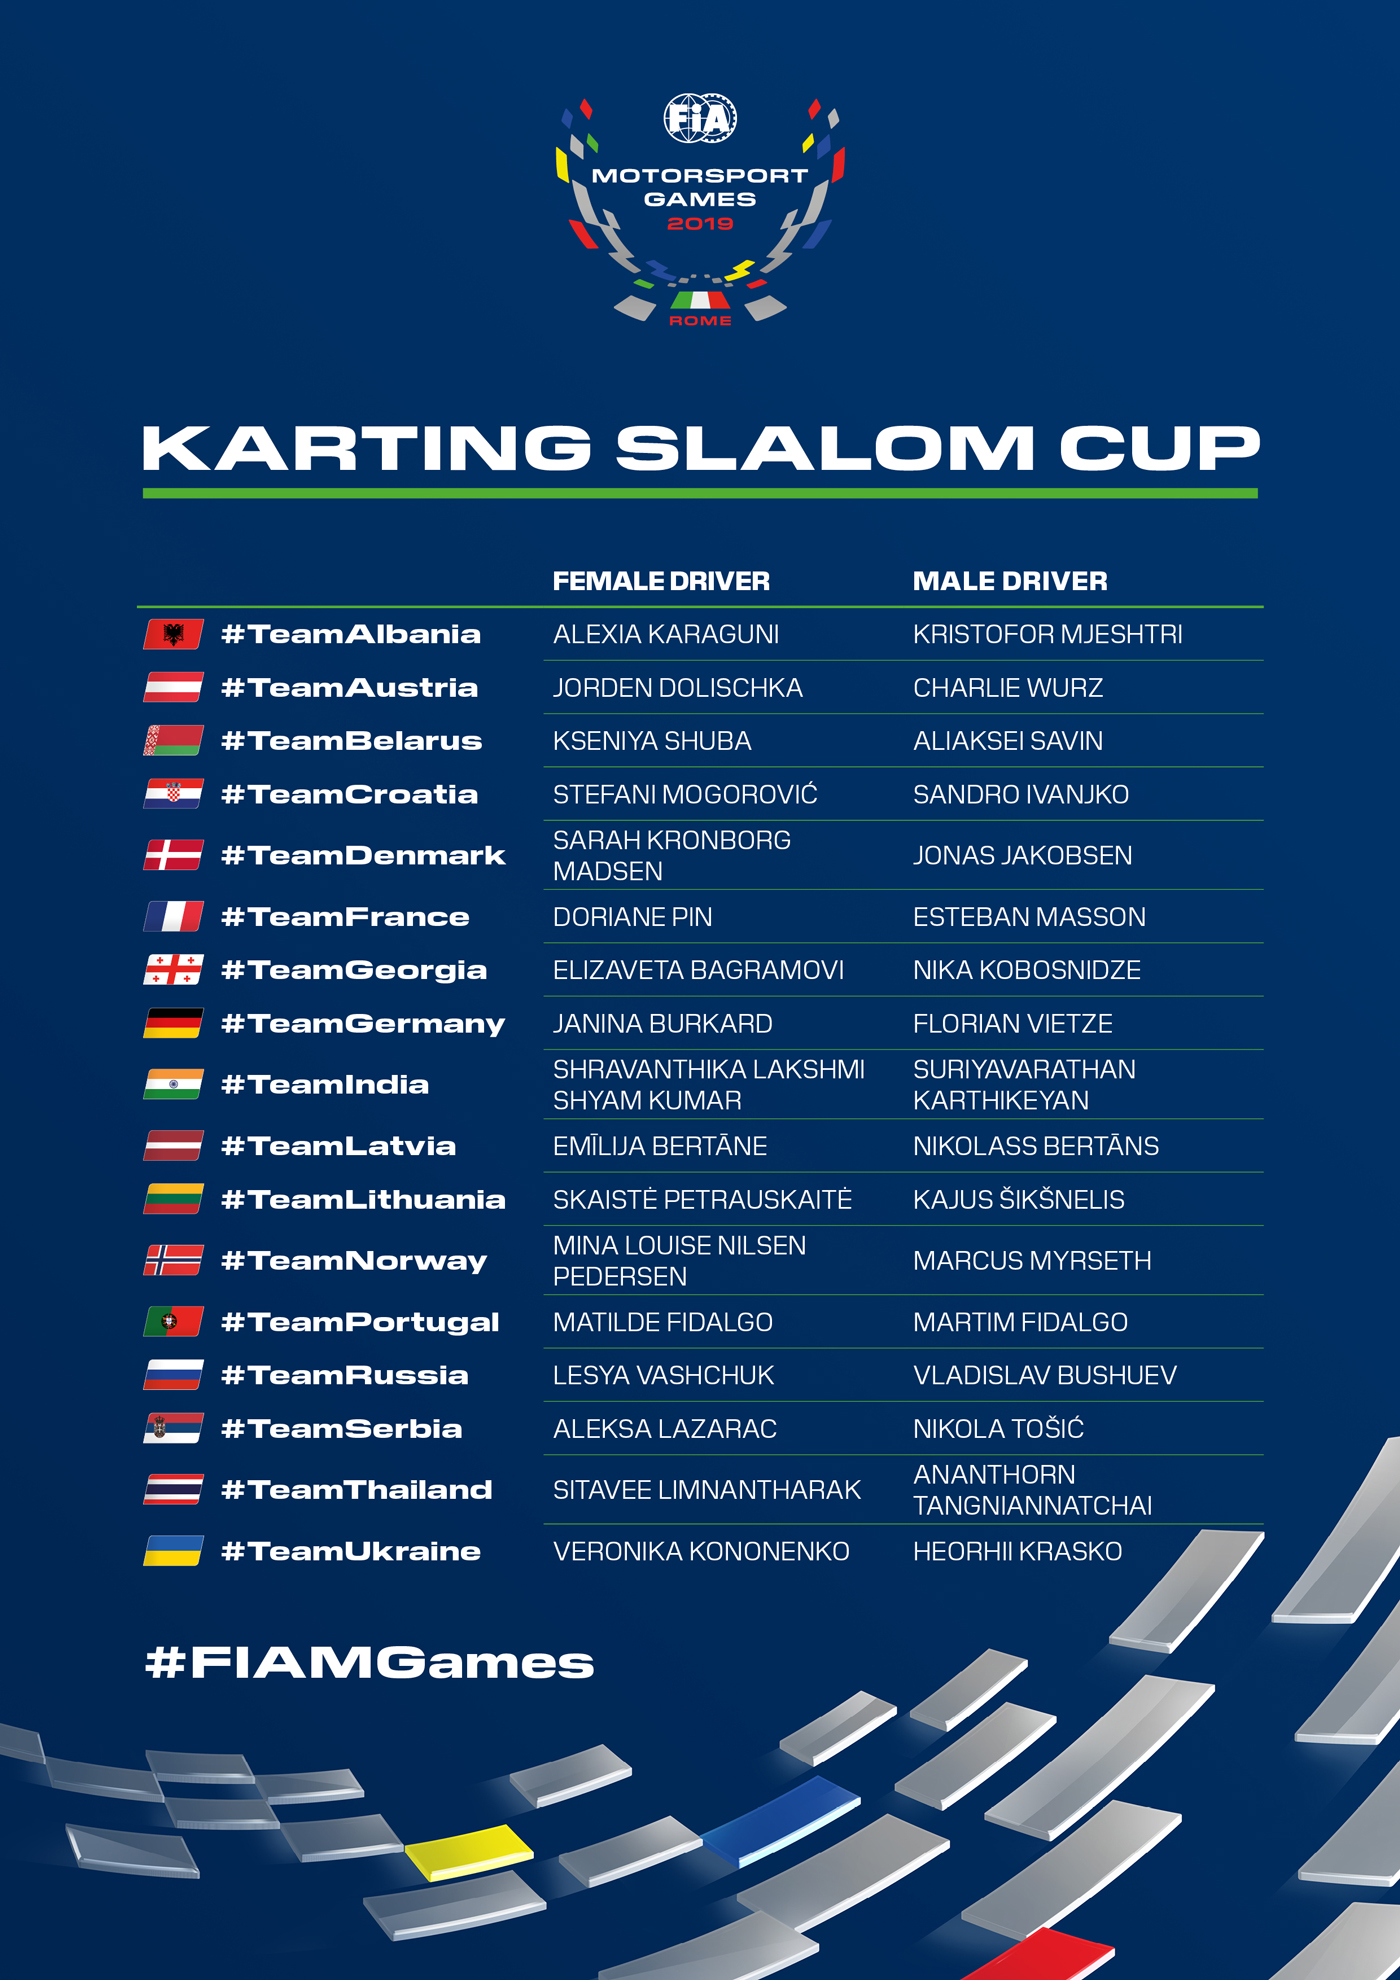 Fia karting slalom cup teams and drivers